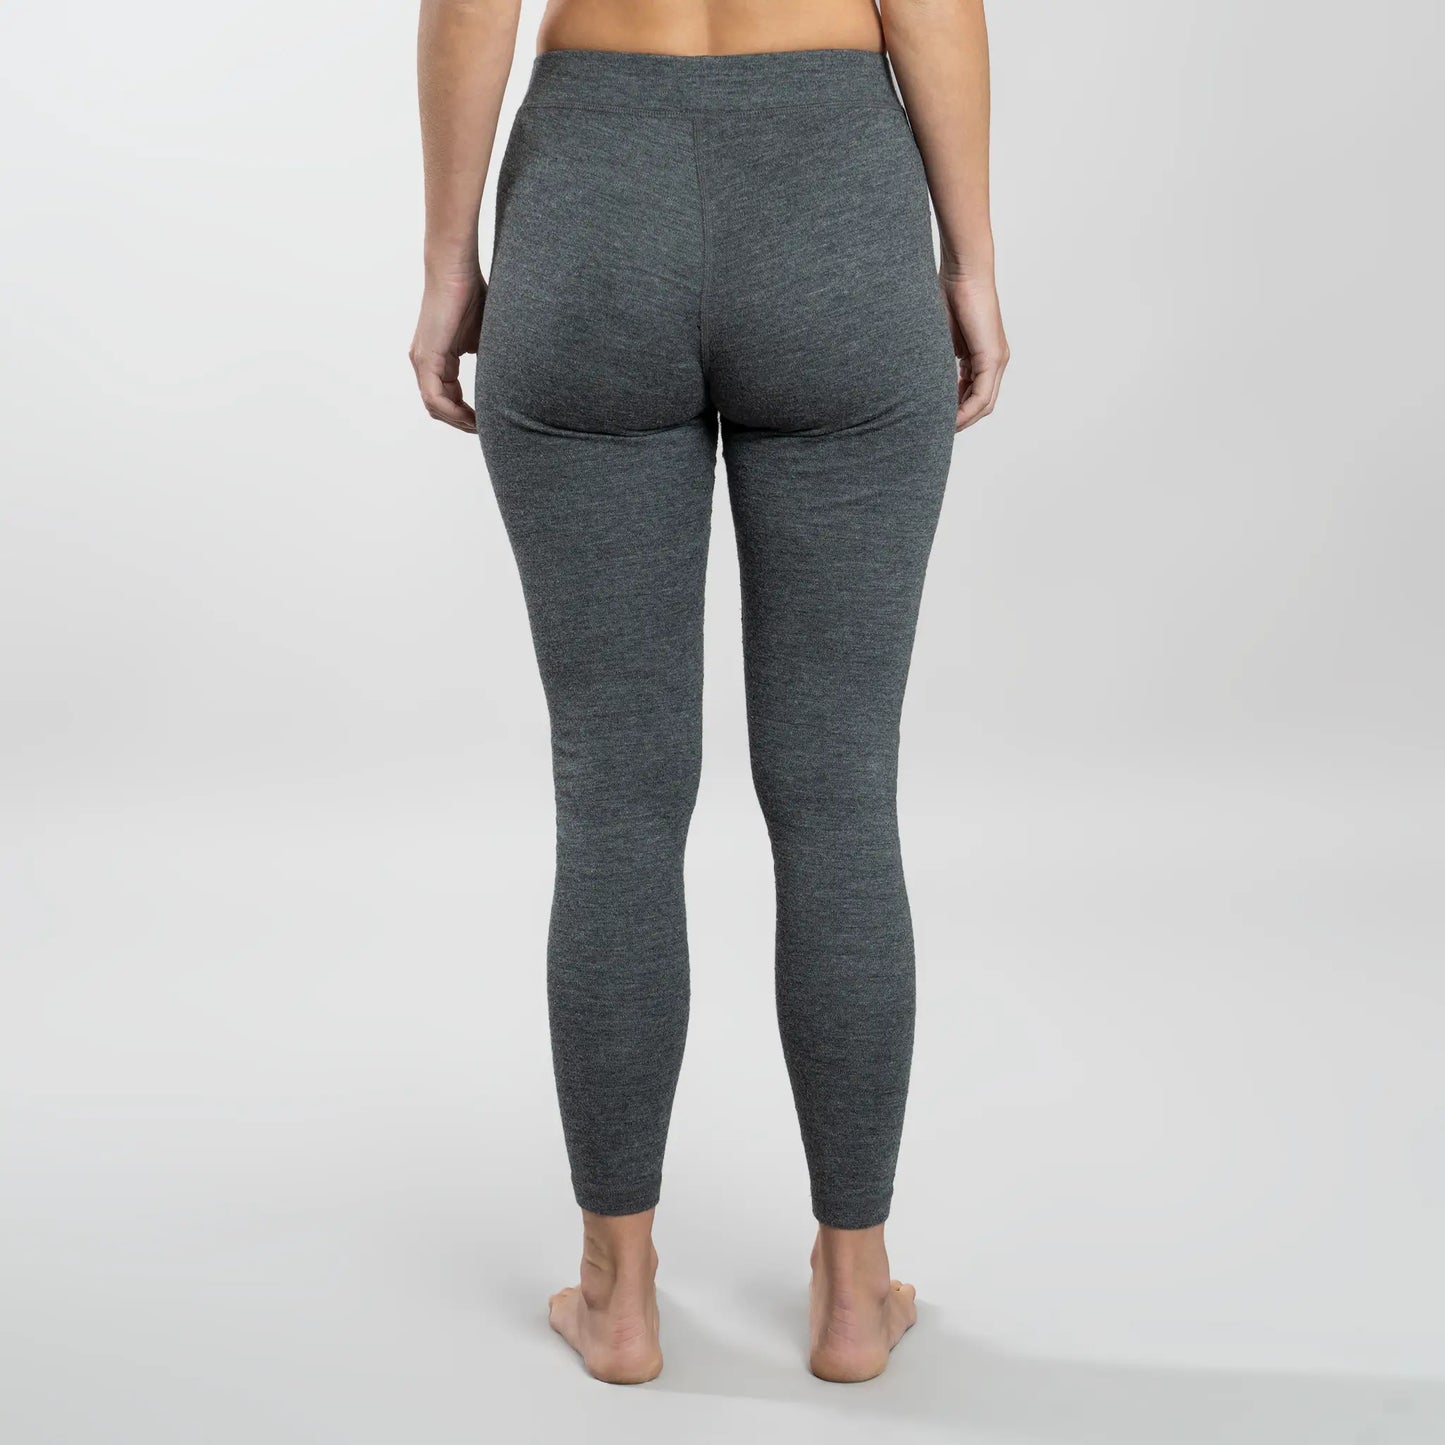 womens high performance leggings lightweight color gray